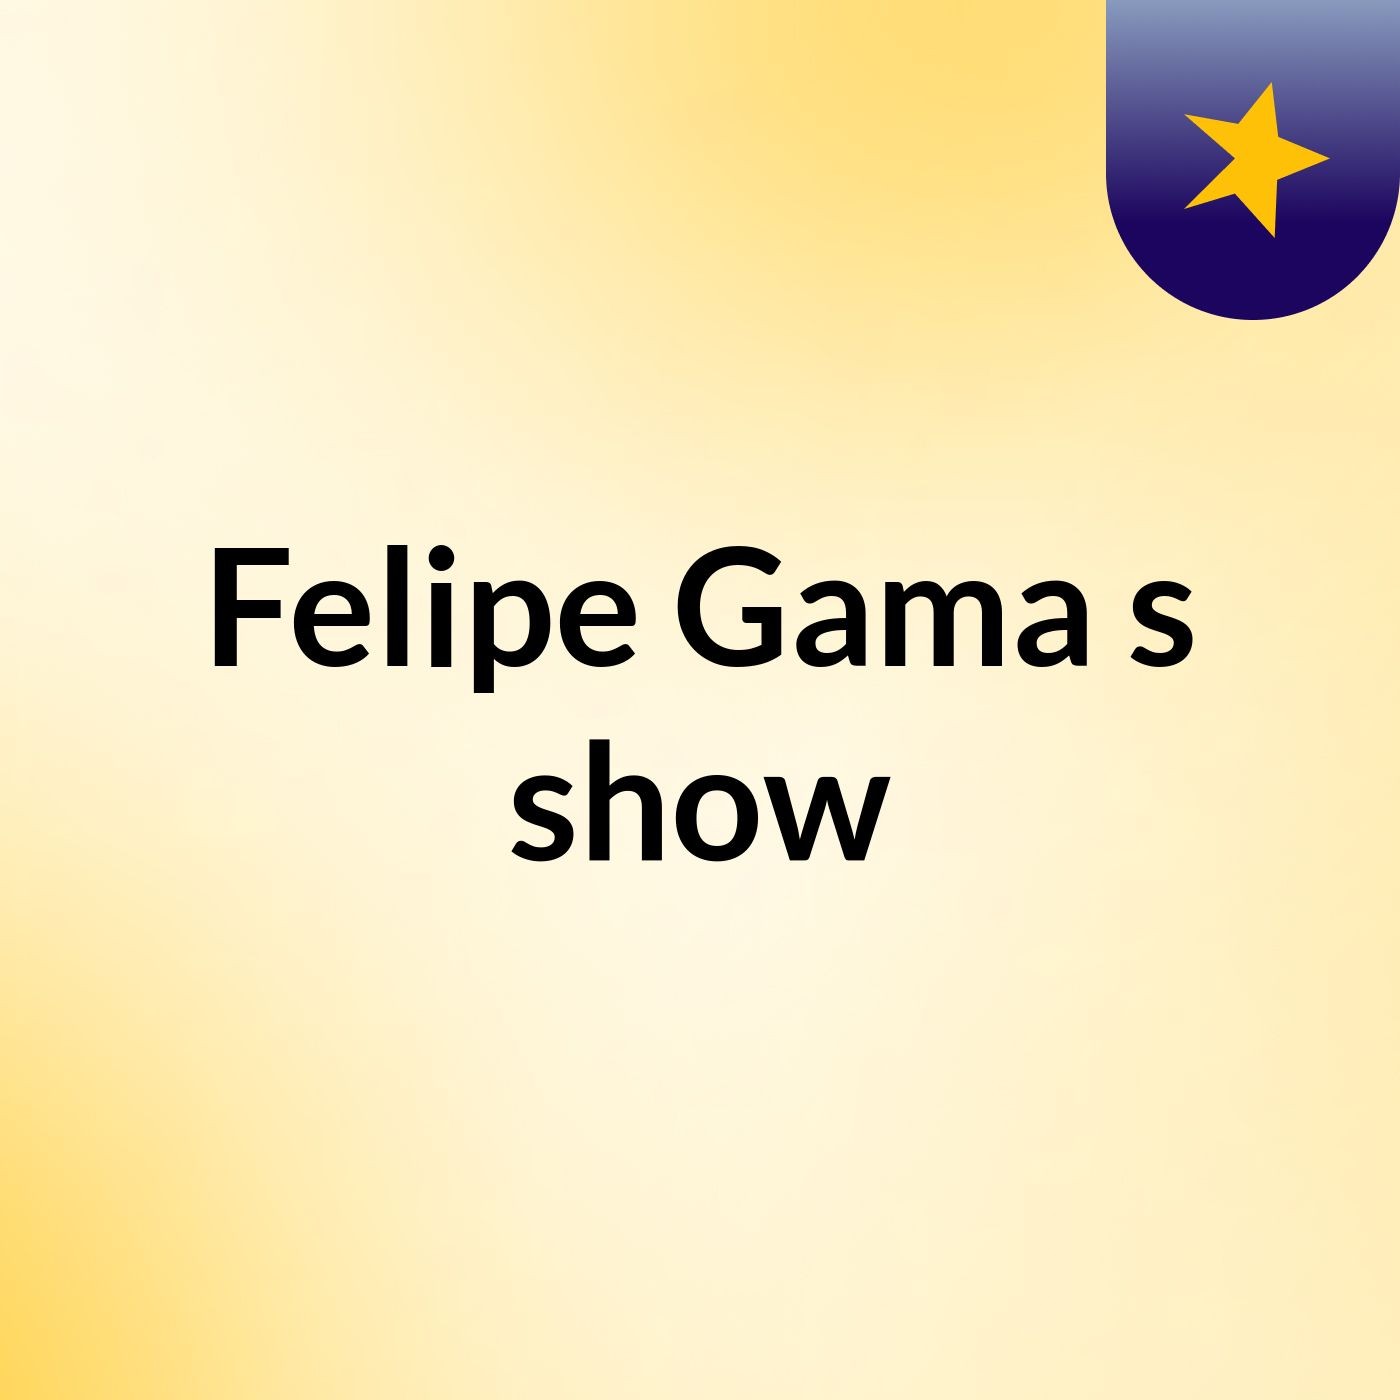 Felipe Gama's show